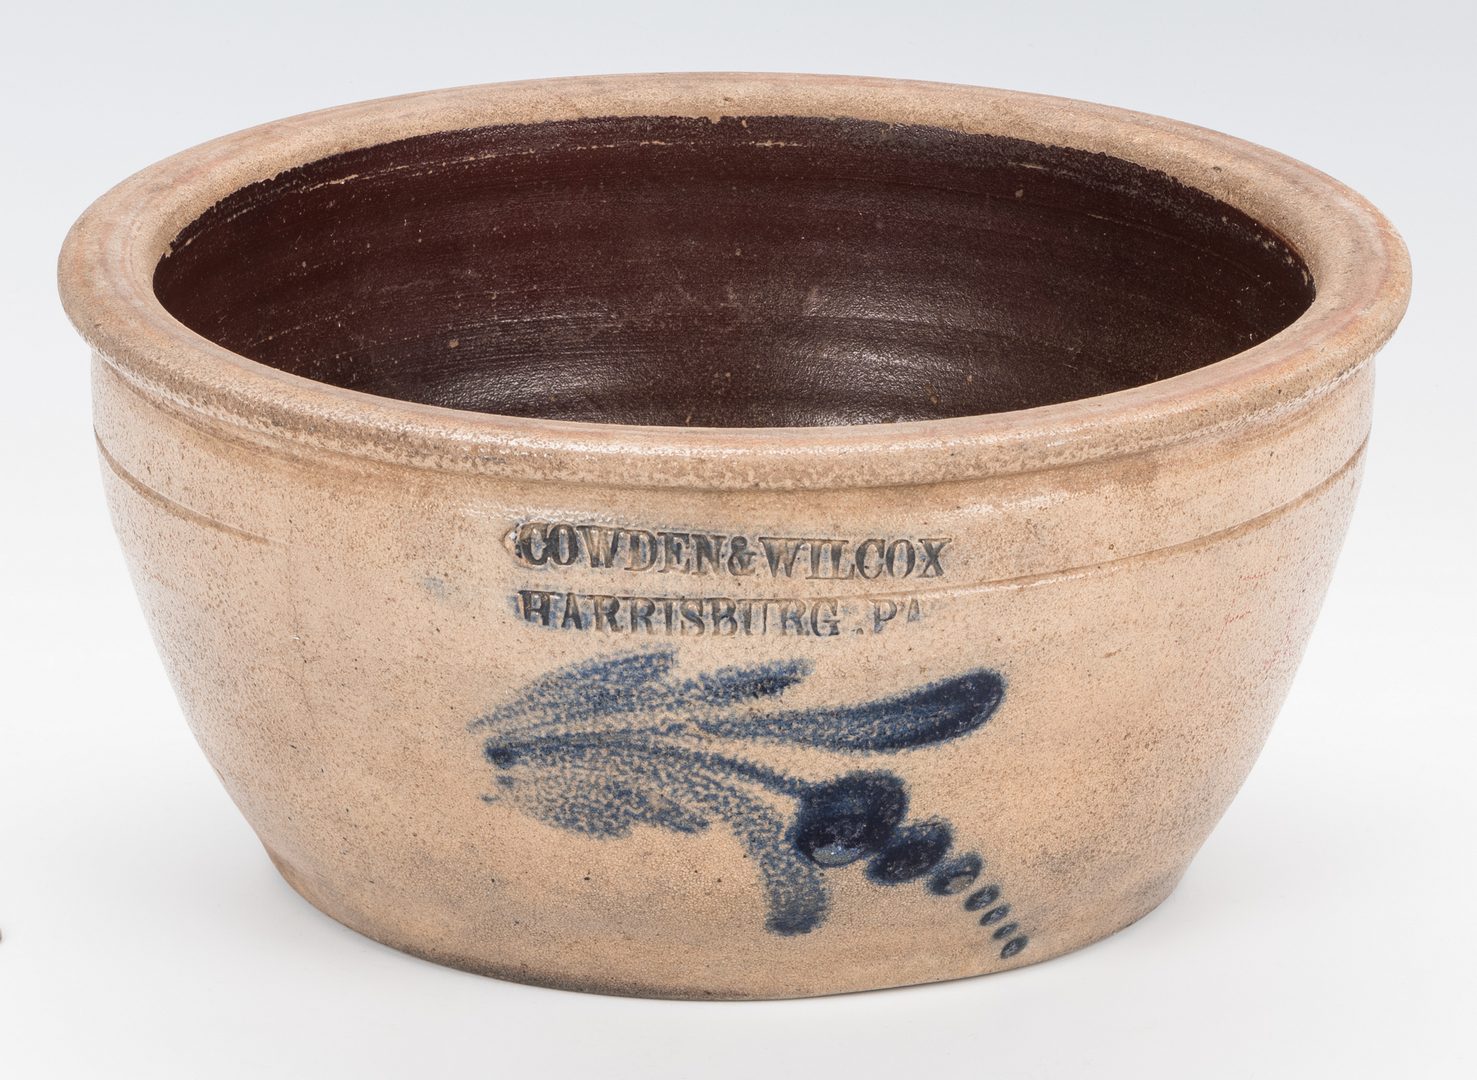 Lot 736: PA Stoneware Pottery Bowl, Cowden & Wilcox